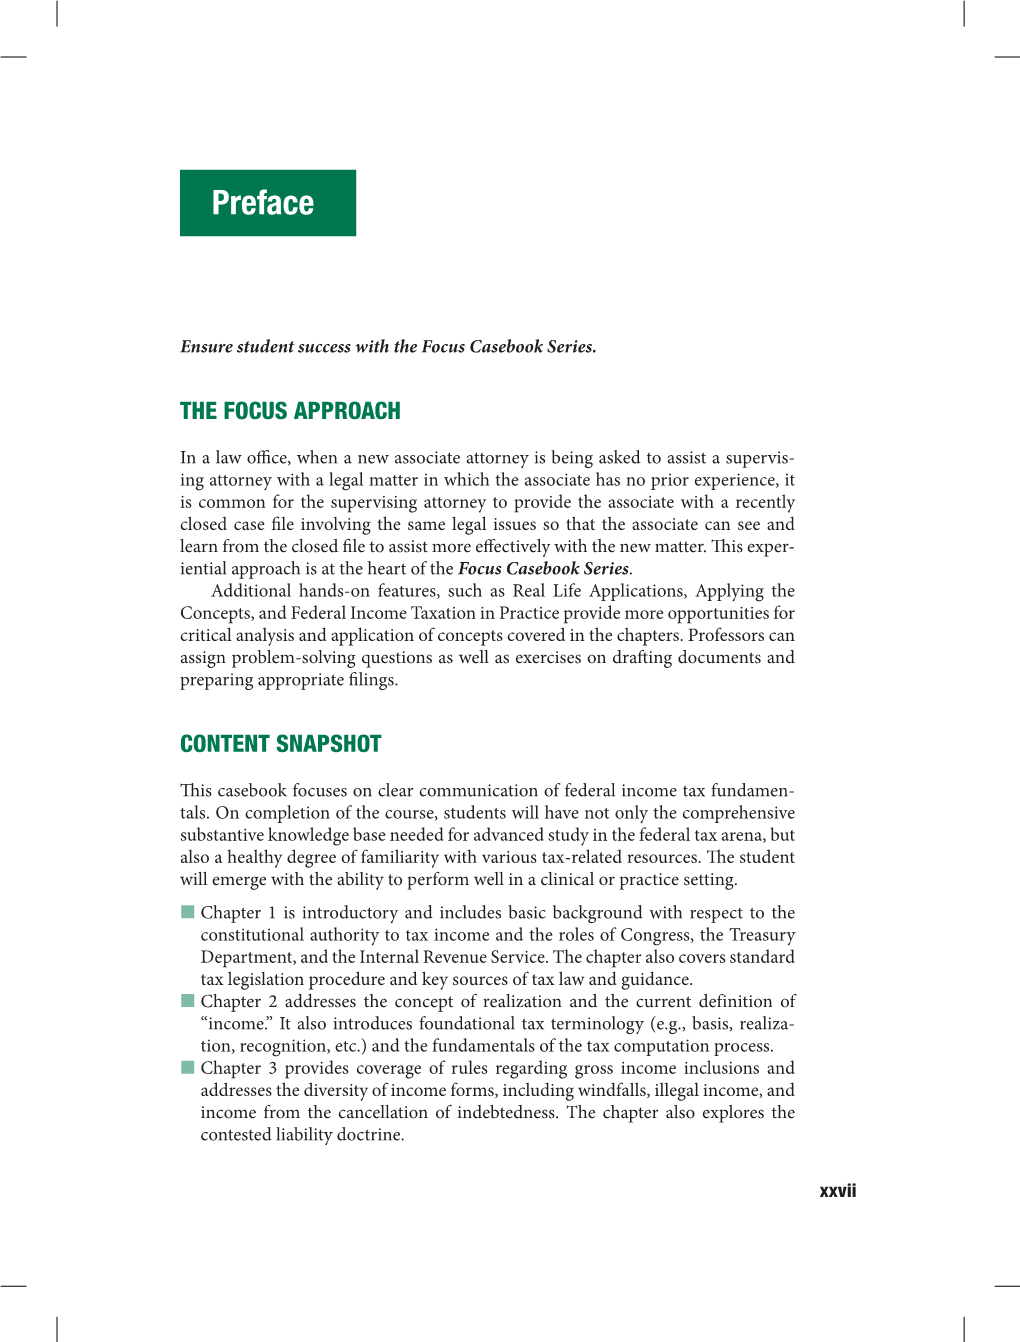 Preface (PDF Download)